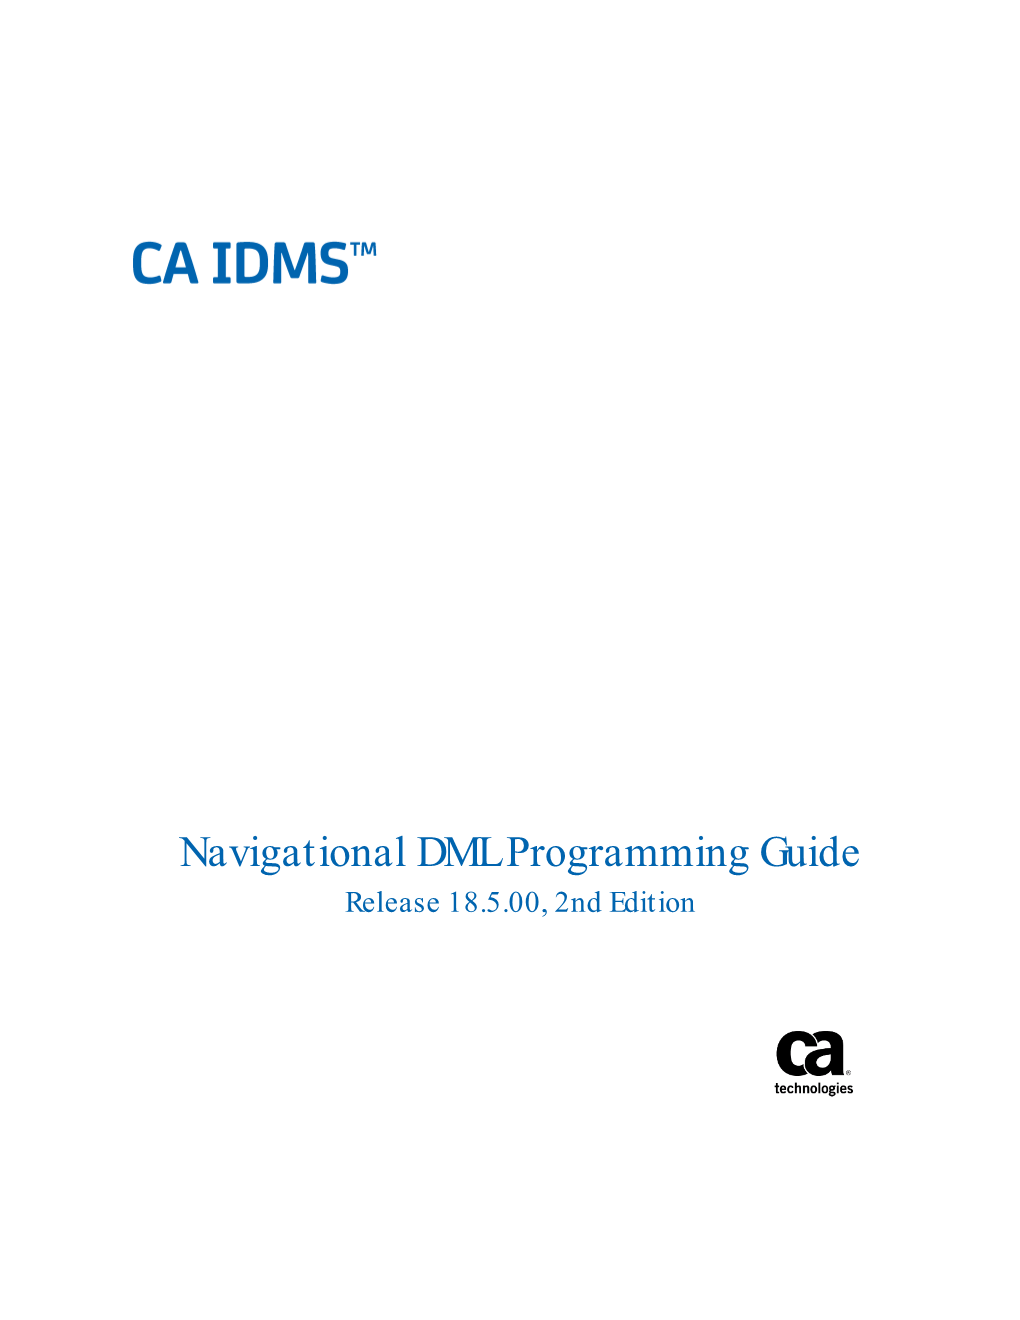 CA IDMS Navigational DML Programming Guide